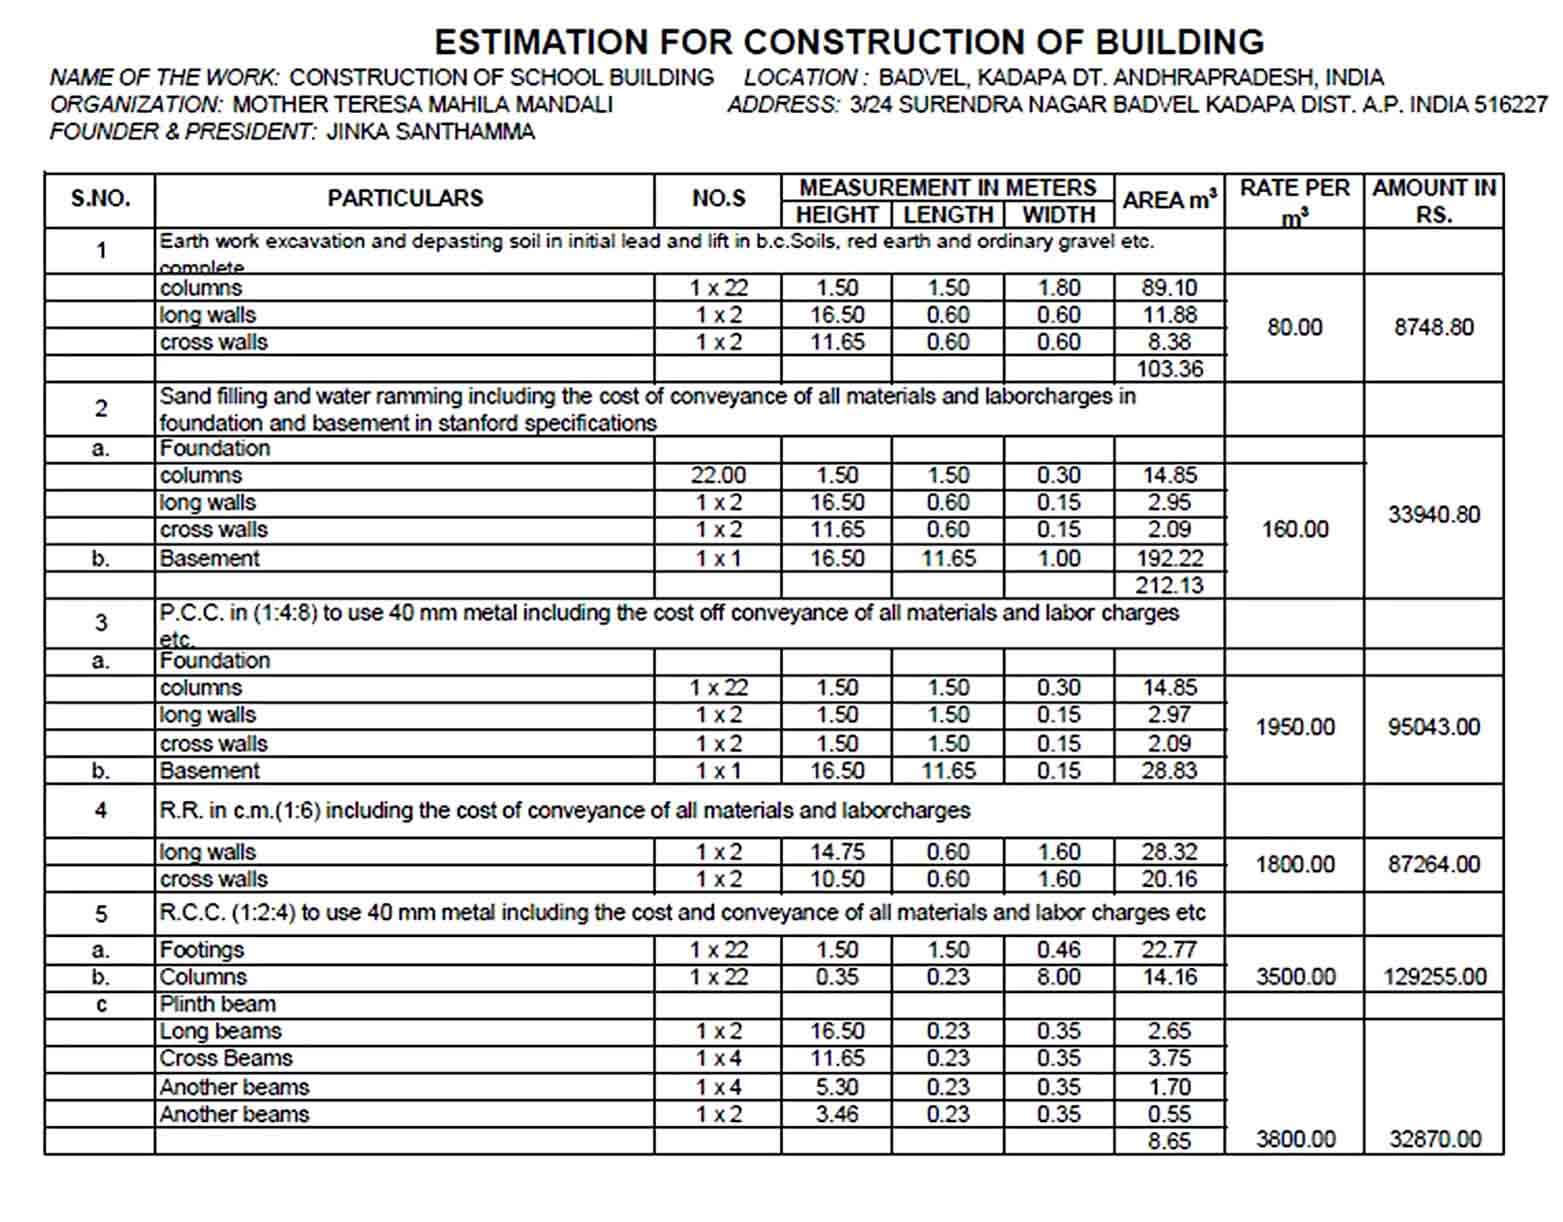 Estimation for Construction of School